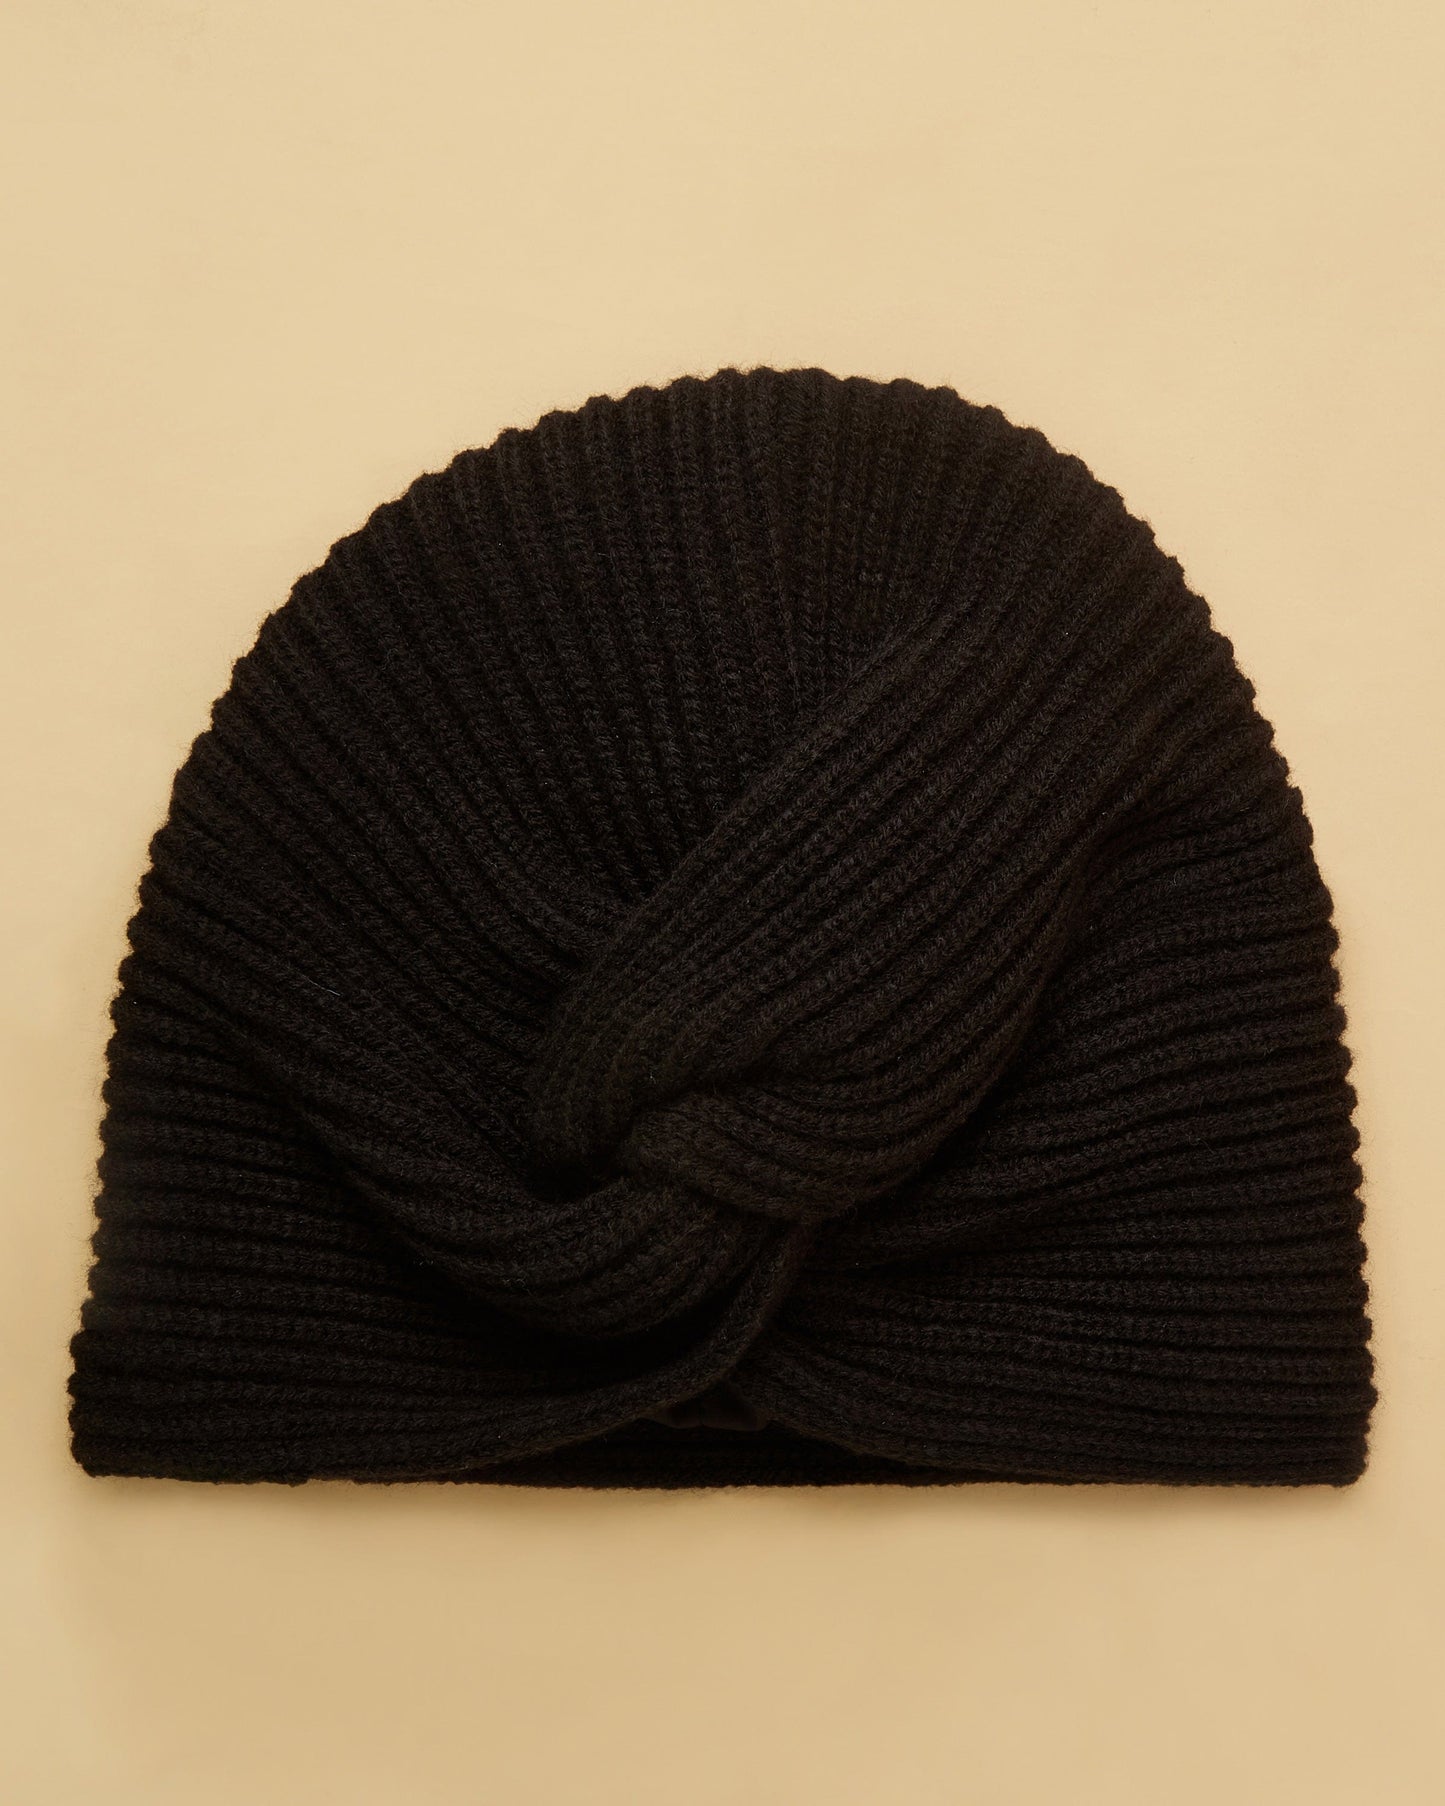 The Wrap Life Satin Lined Winter Turban in Onyx Black Turban